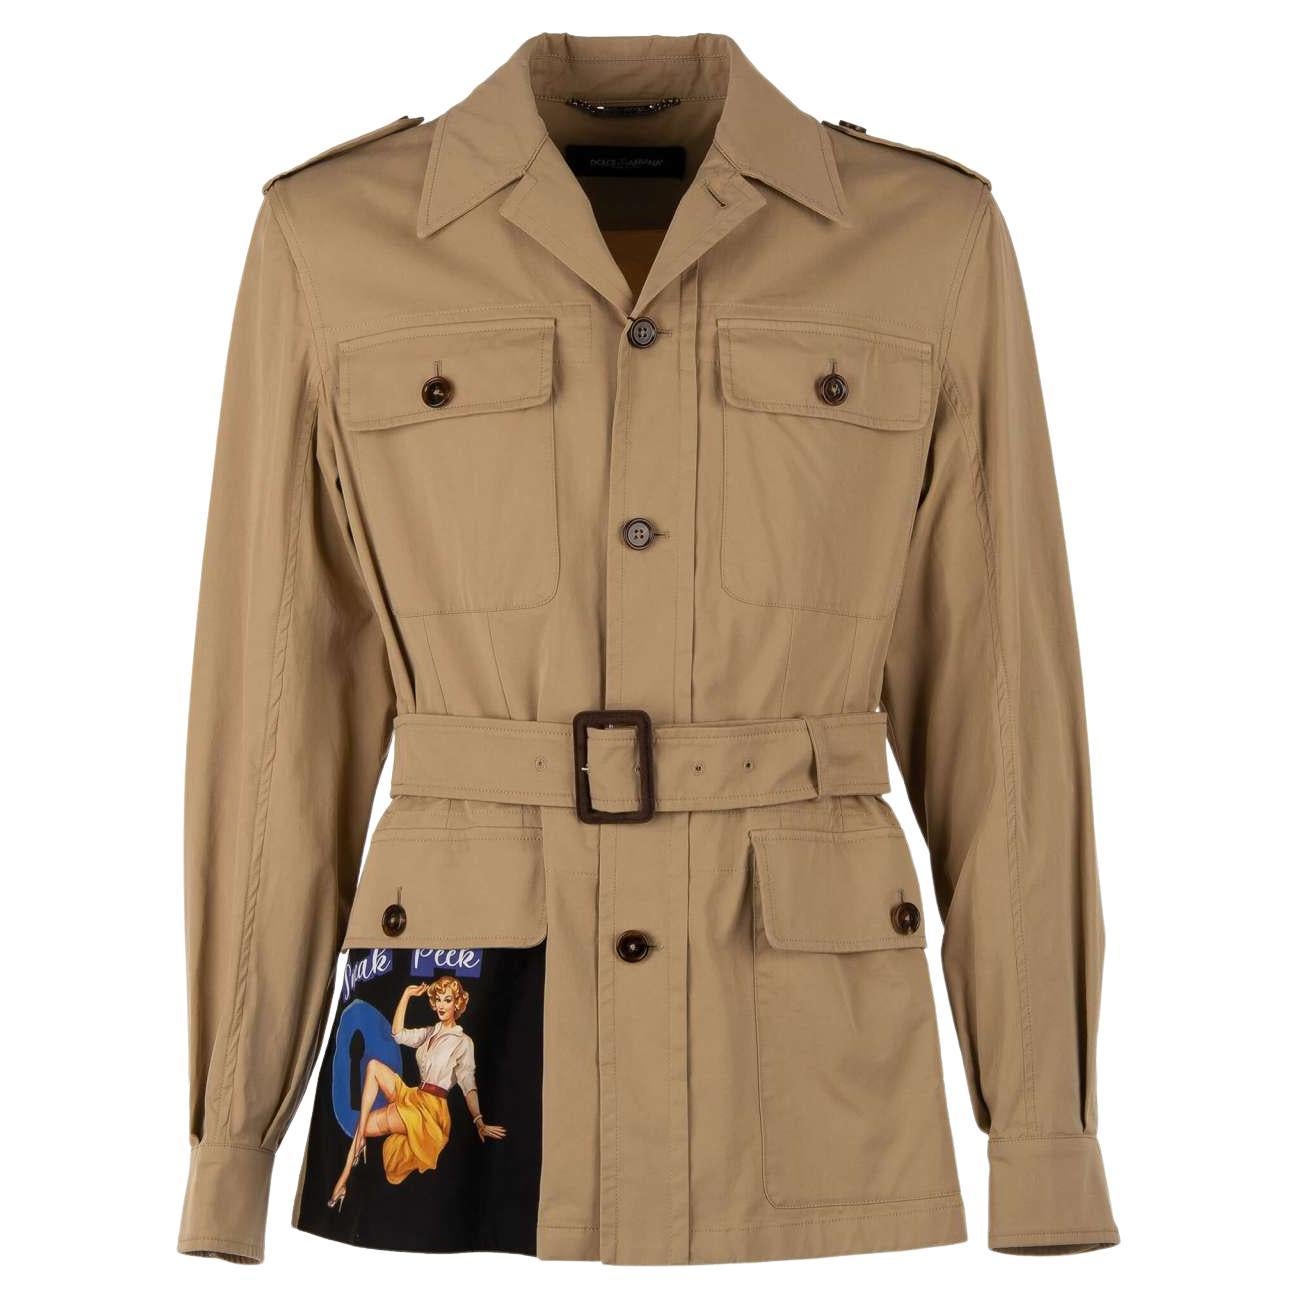 Dolce & Gabbana Canvas Safari Jacket SNEAK PEEK with Belt and Pockets Beige 46 For Sale